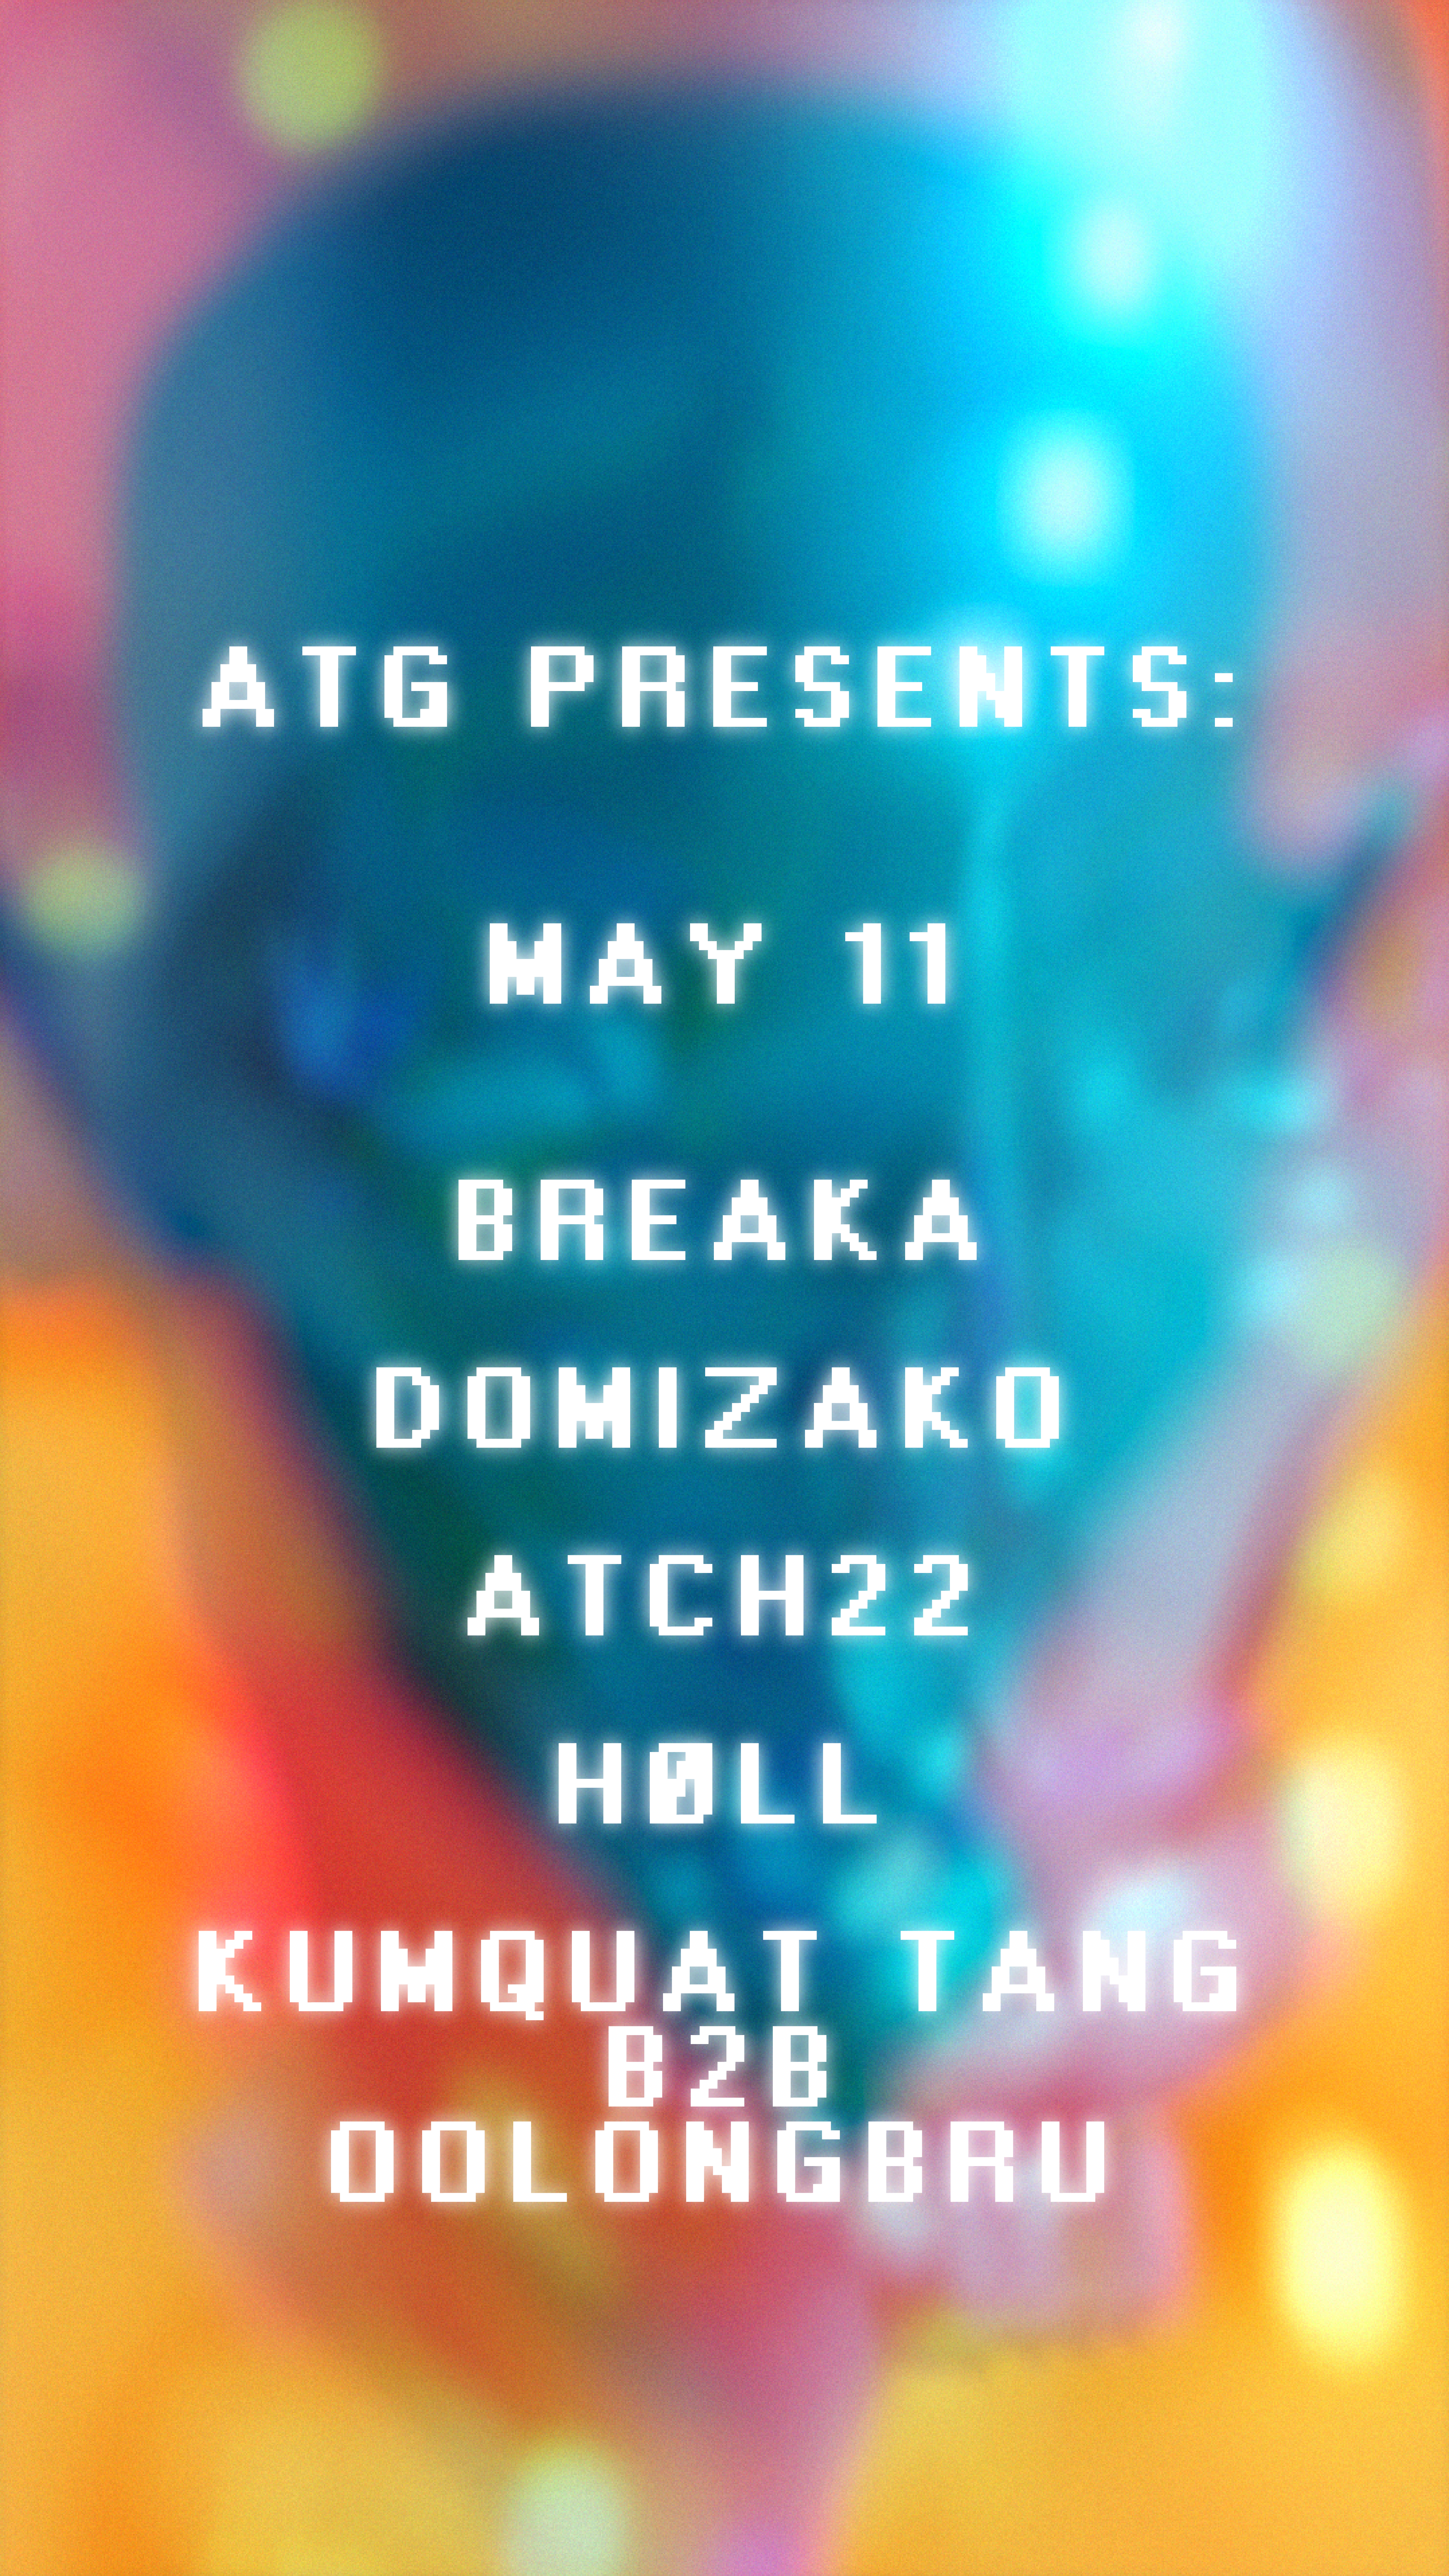 [CANCELLED] ATG presents: Breaka (UK), domizako, Atch22, Høll, Kumquat Tang b2b oolongbru - フライヤー裏